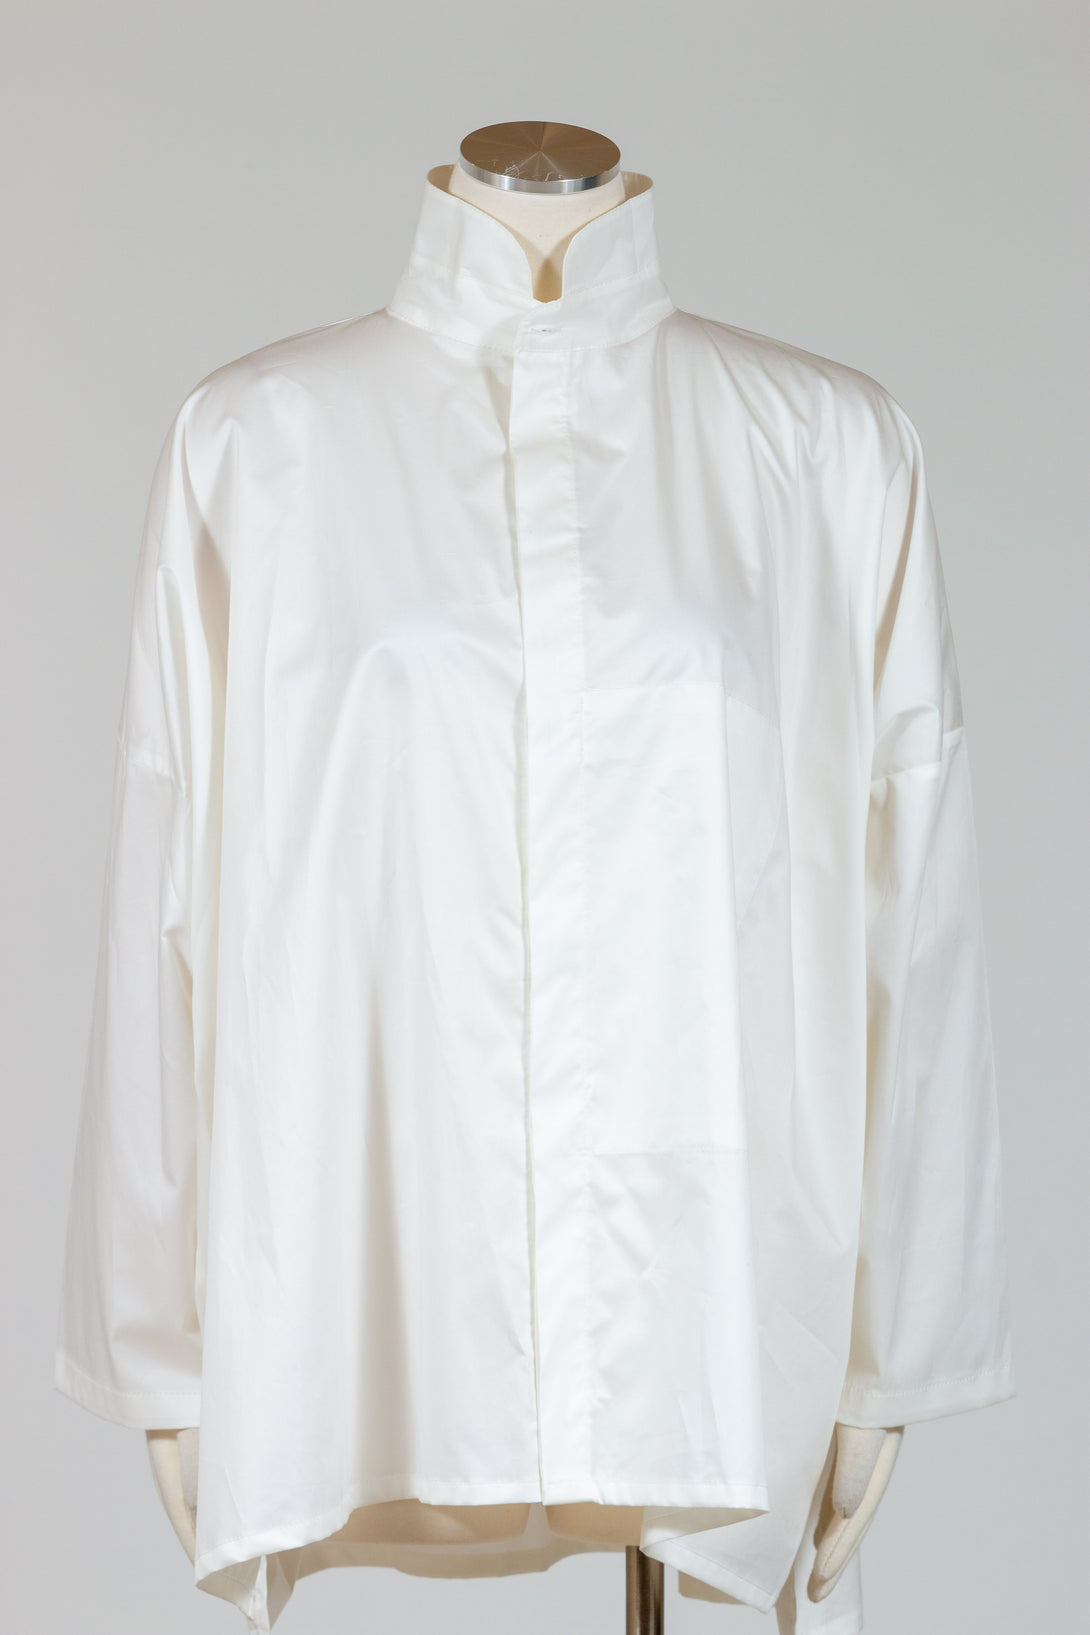 Planet-LaurenG-Signature-Shirt-White